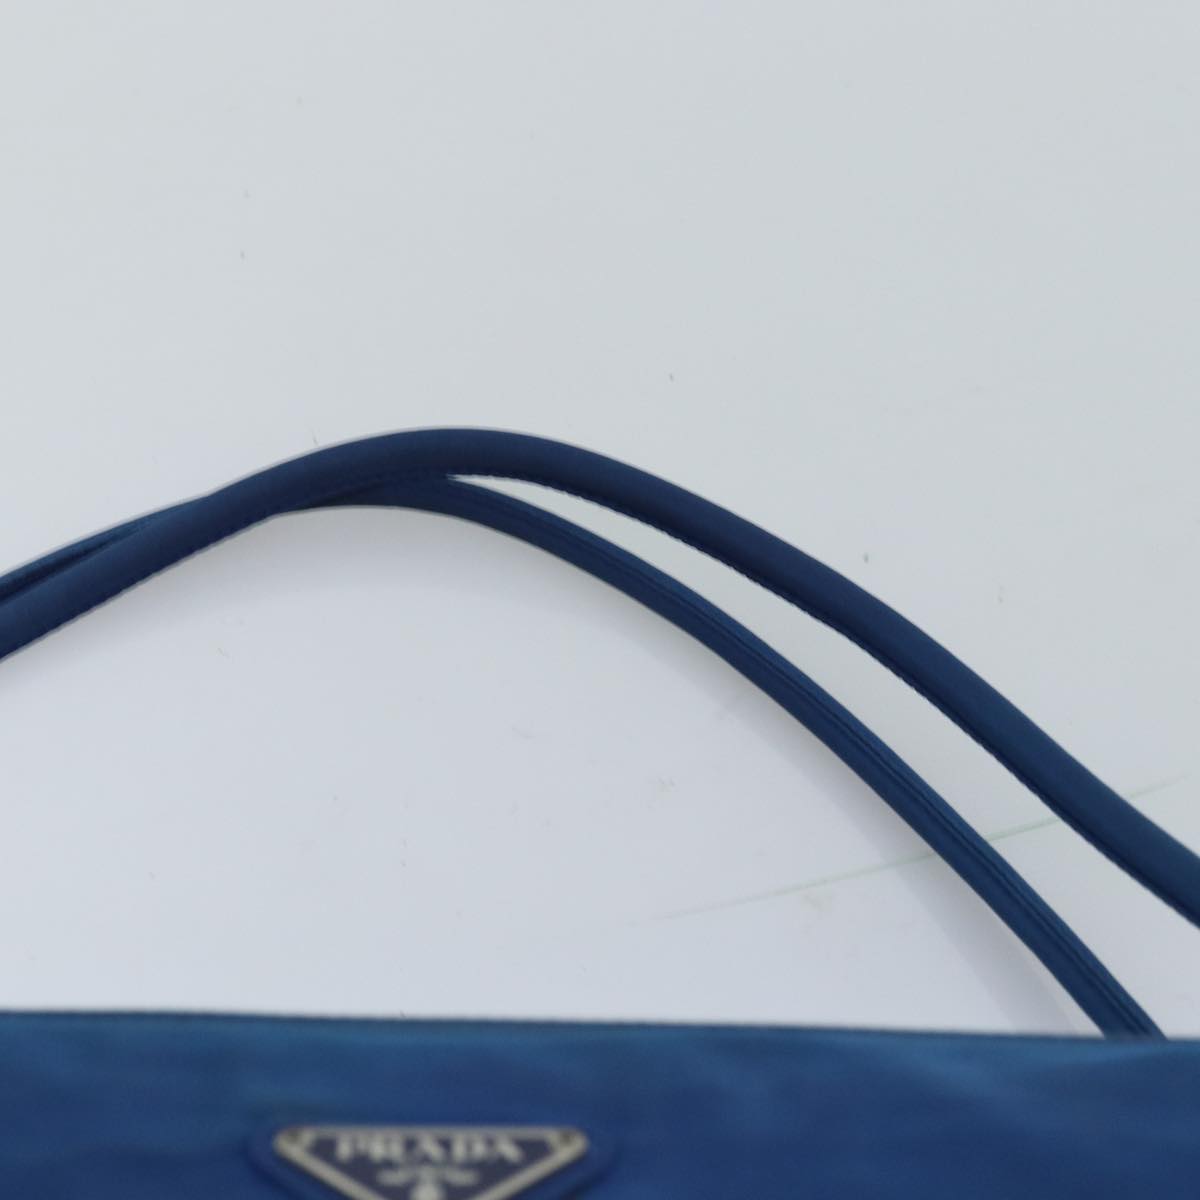 PRADA Tote Bag Nylon Blue Auth 74536